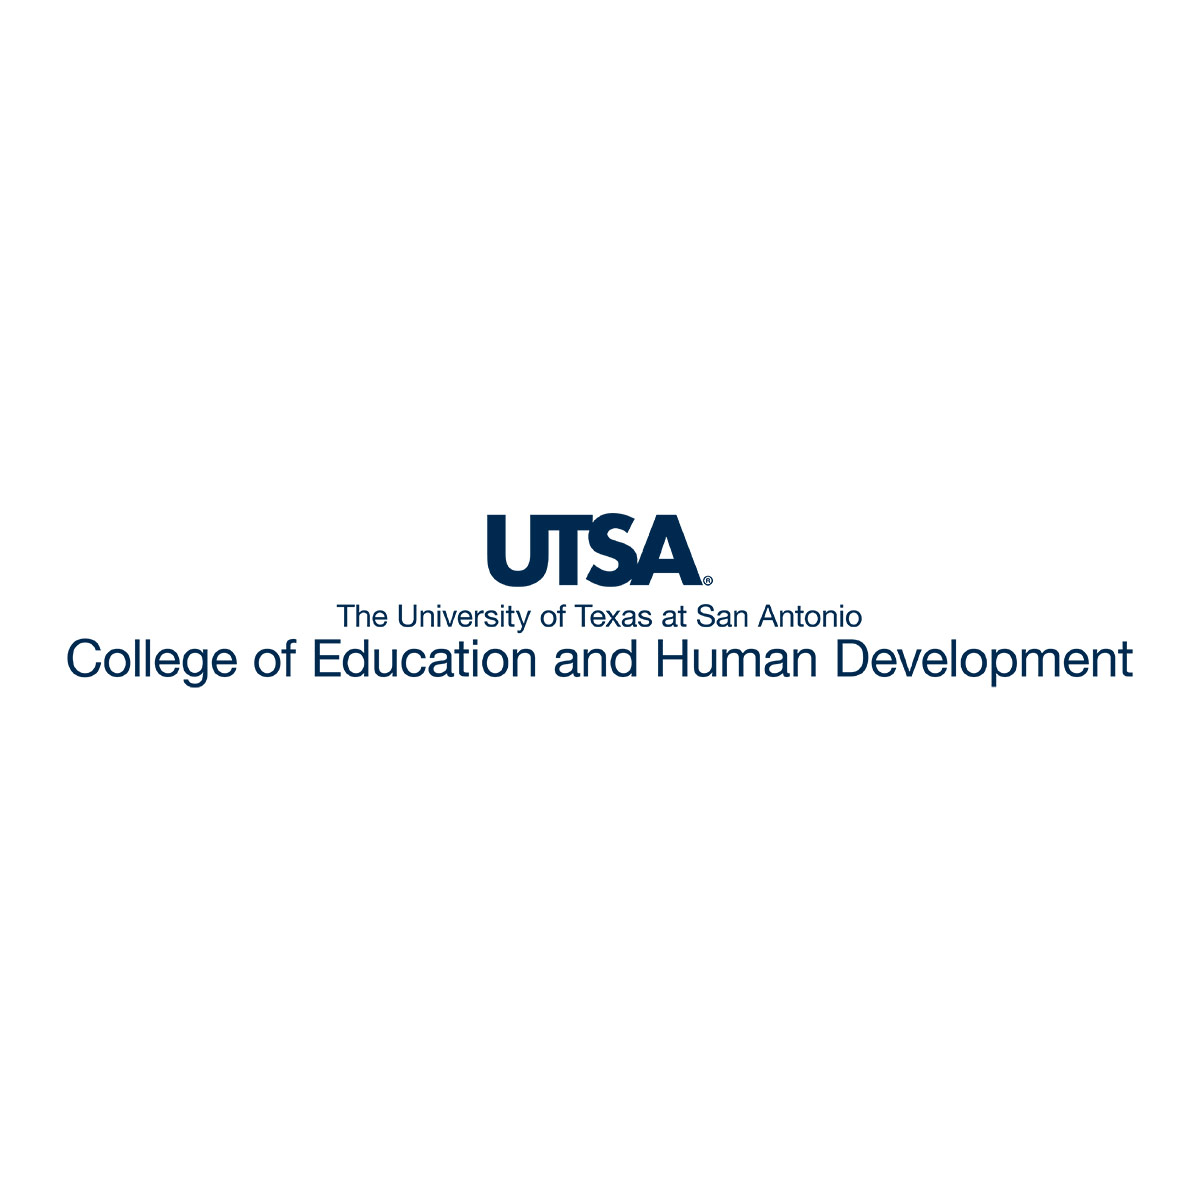 UTSA College of Education and Human Development logo